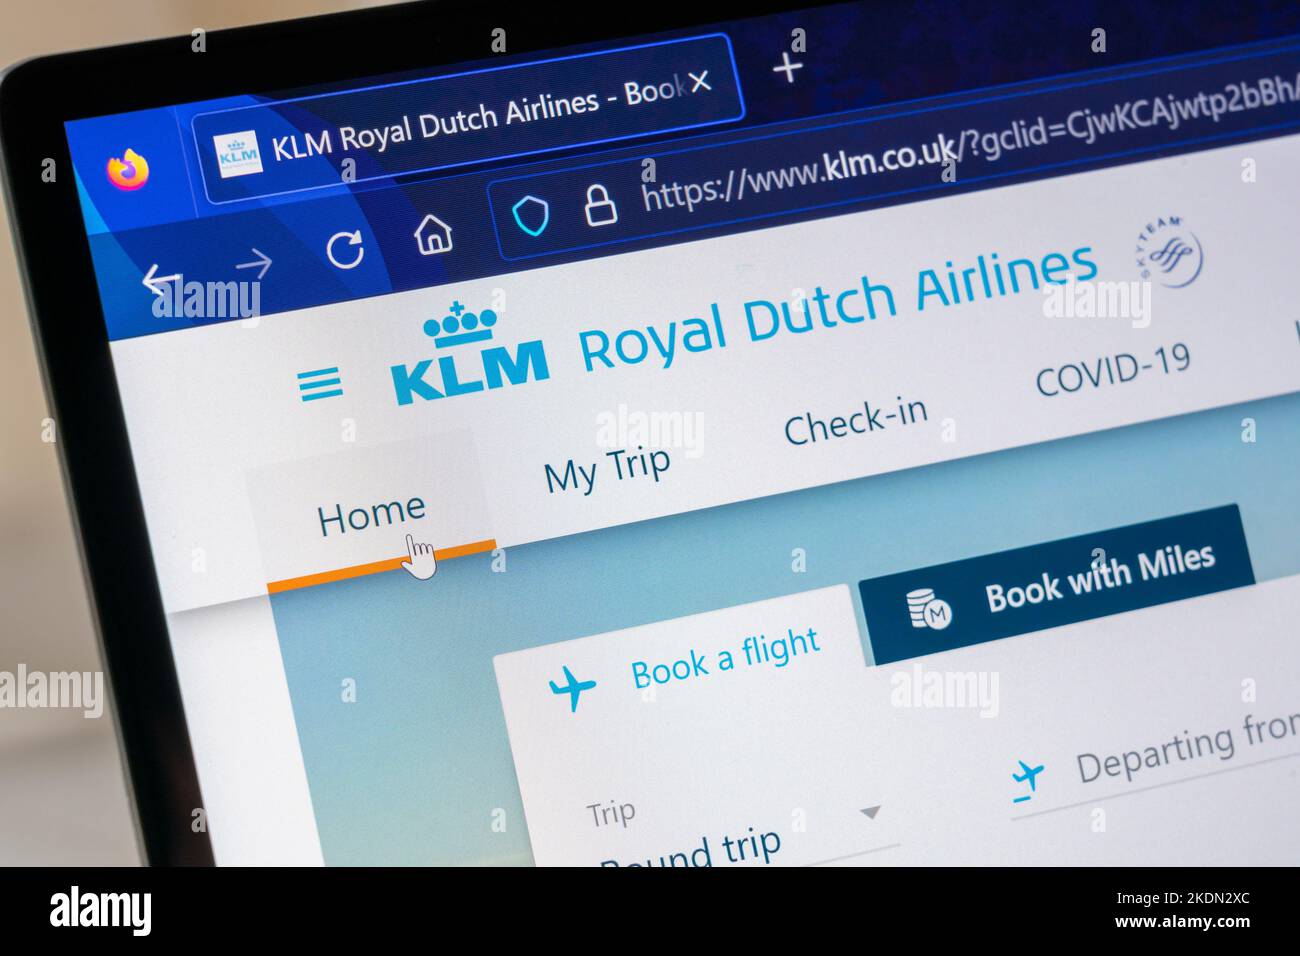 Pagina web di prenotazione per KLM Royal Dutch Airlines, legalmente Koninklijke Luchtvaart Maatschappij N.V. – La compagnia aerea di bandiera dei Paesi Bassi Foto Stock